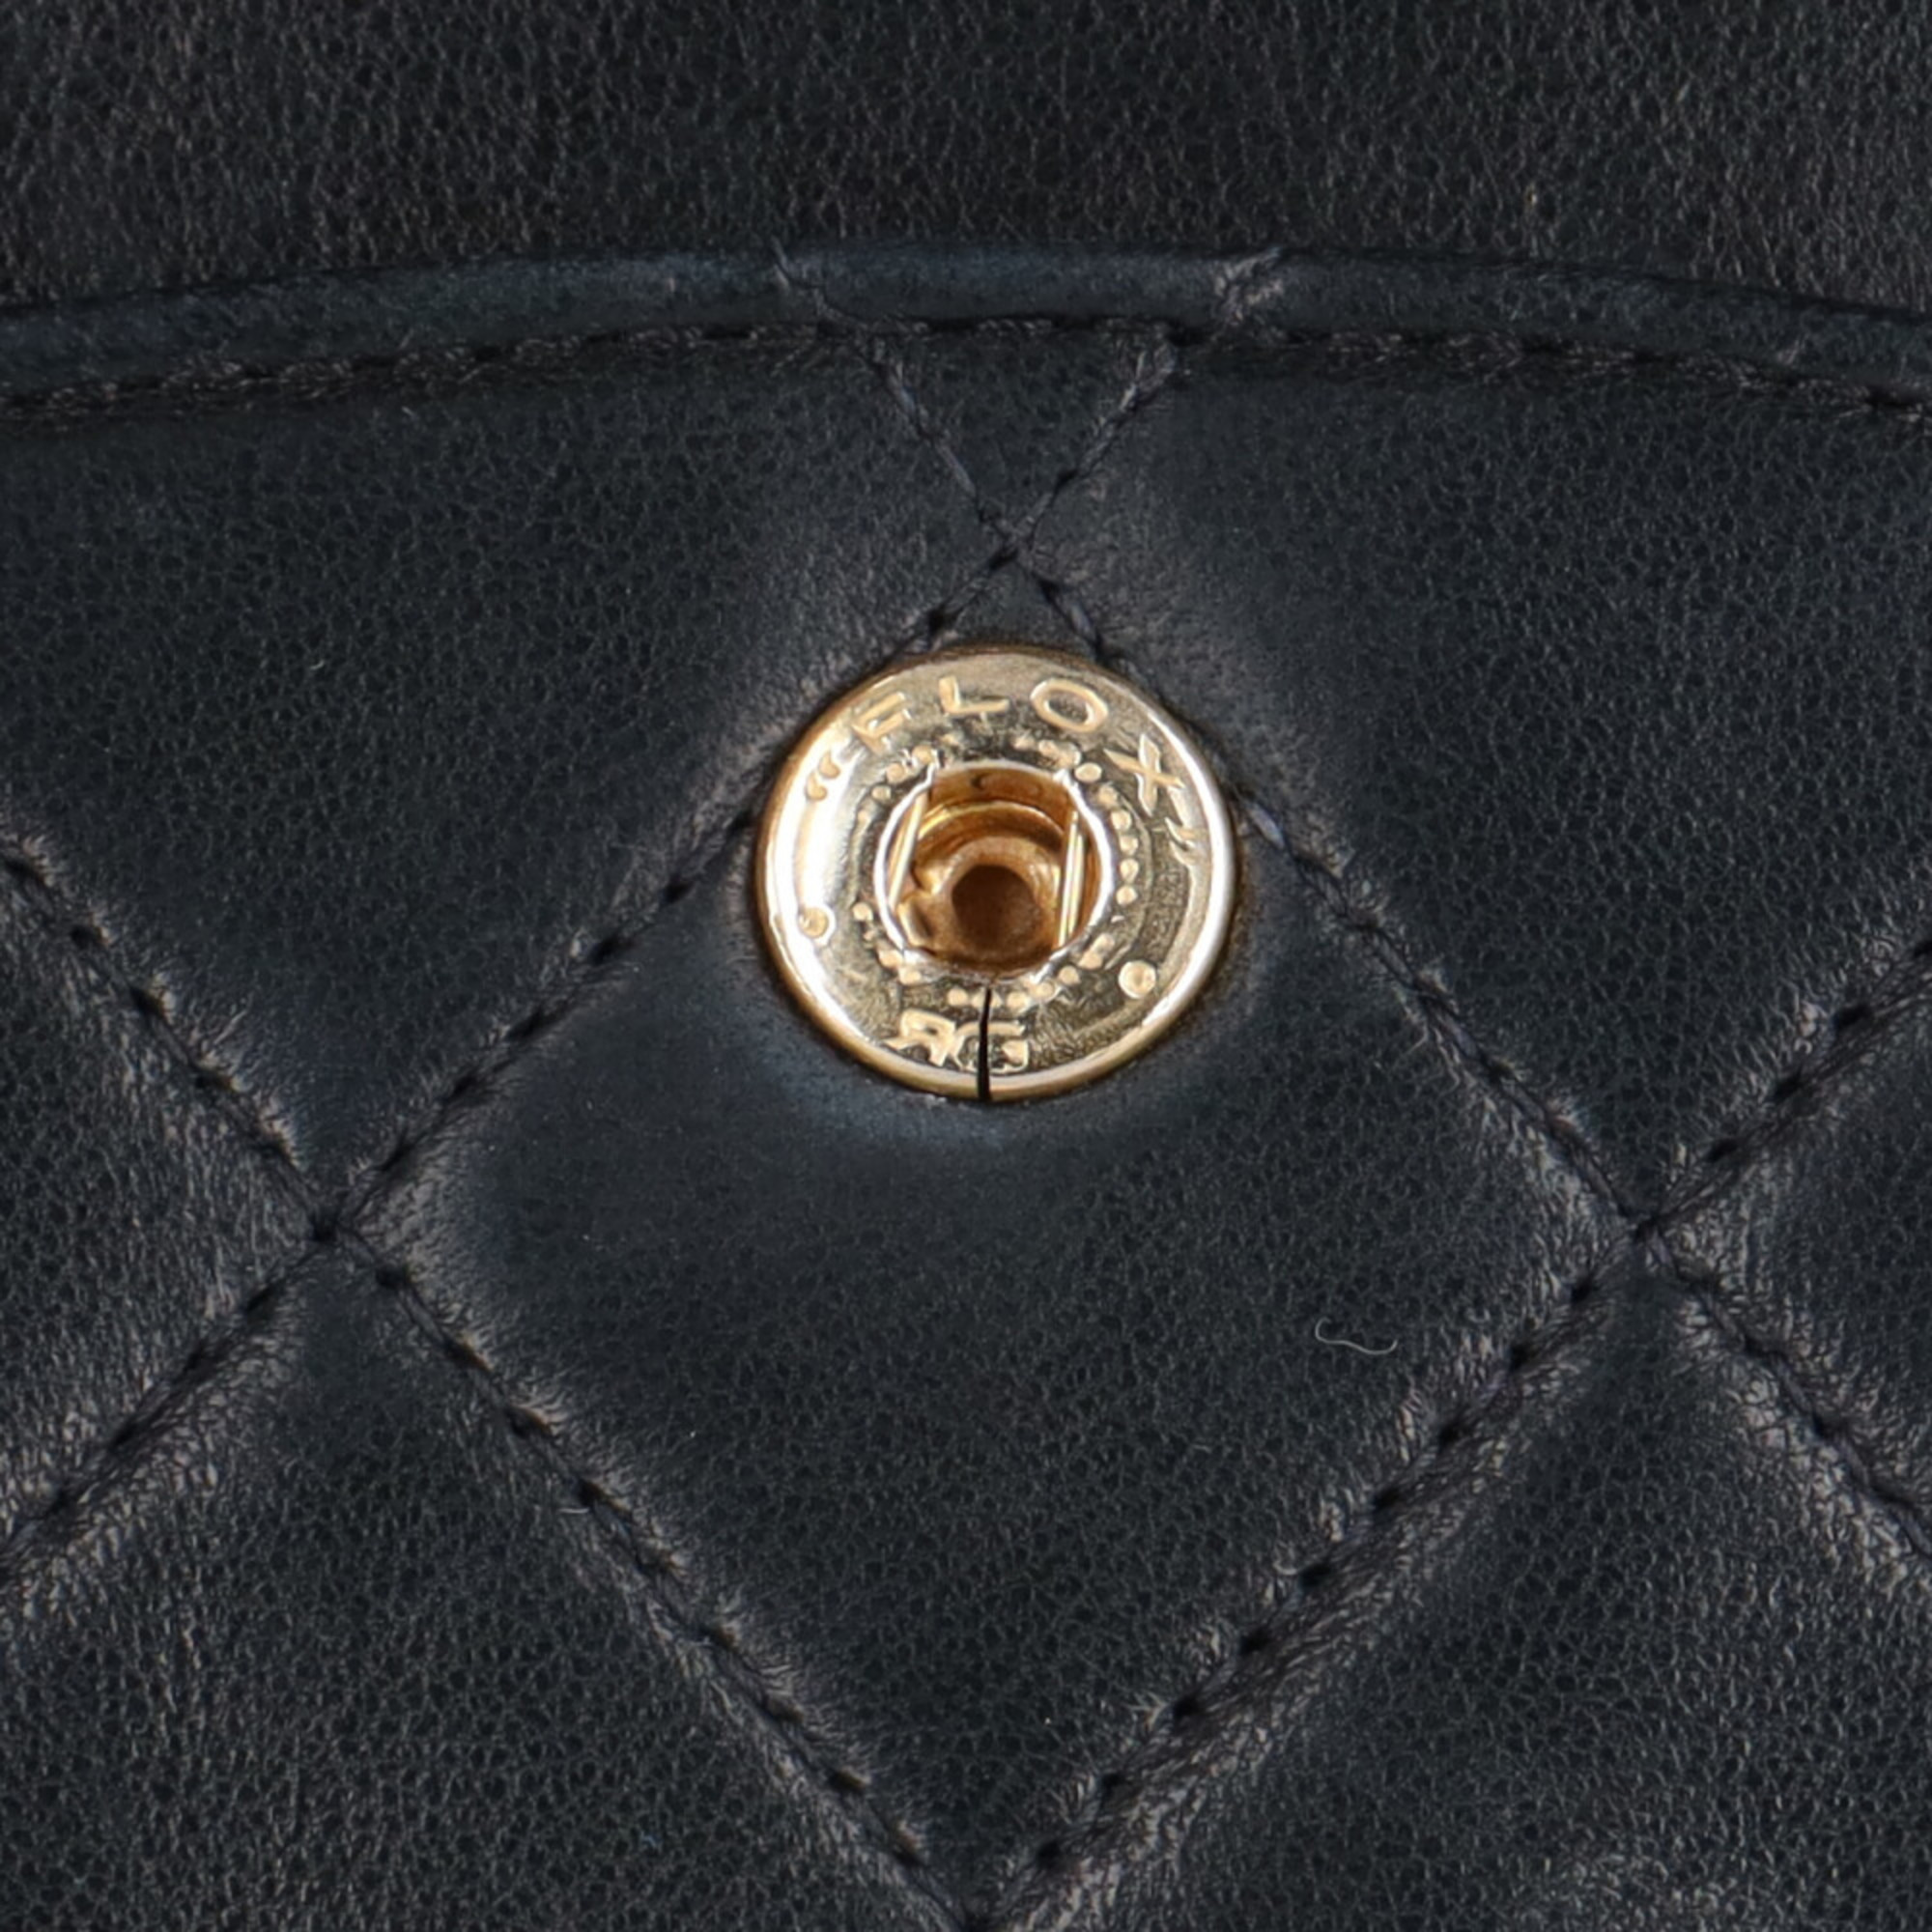 Chanel Matelasse Shoulder Bag Lambskin A01112 Black Women's CHANEL Double Chain Flap